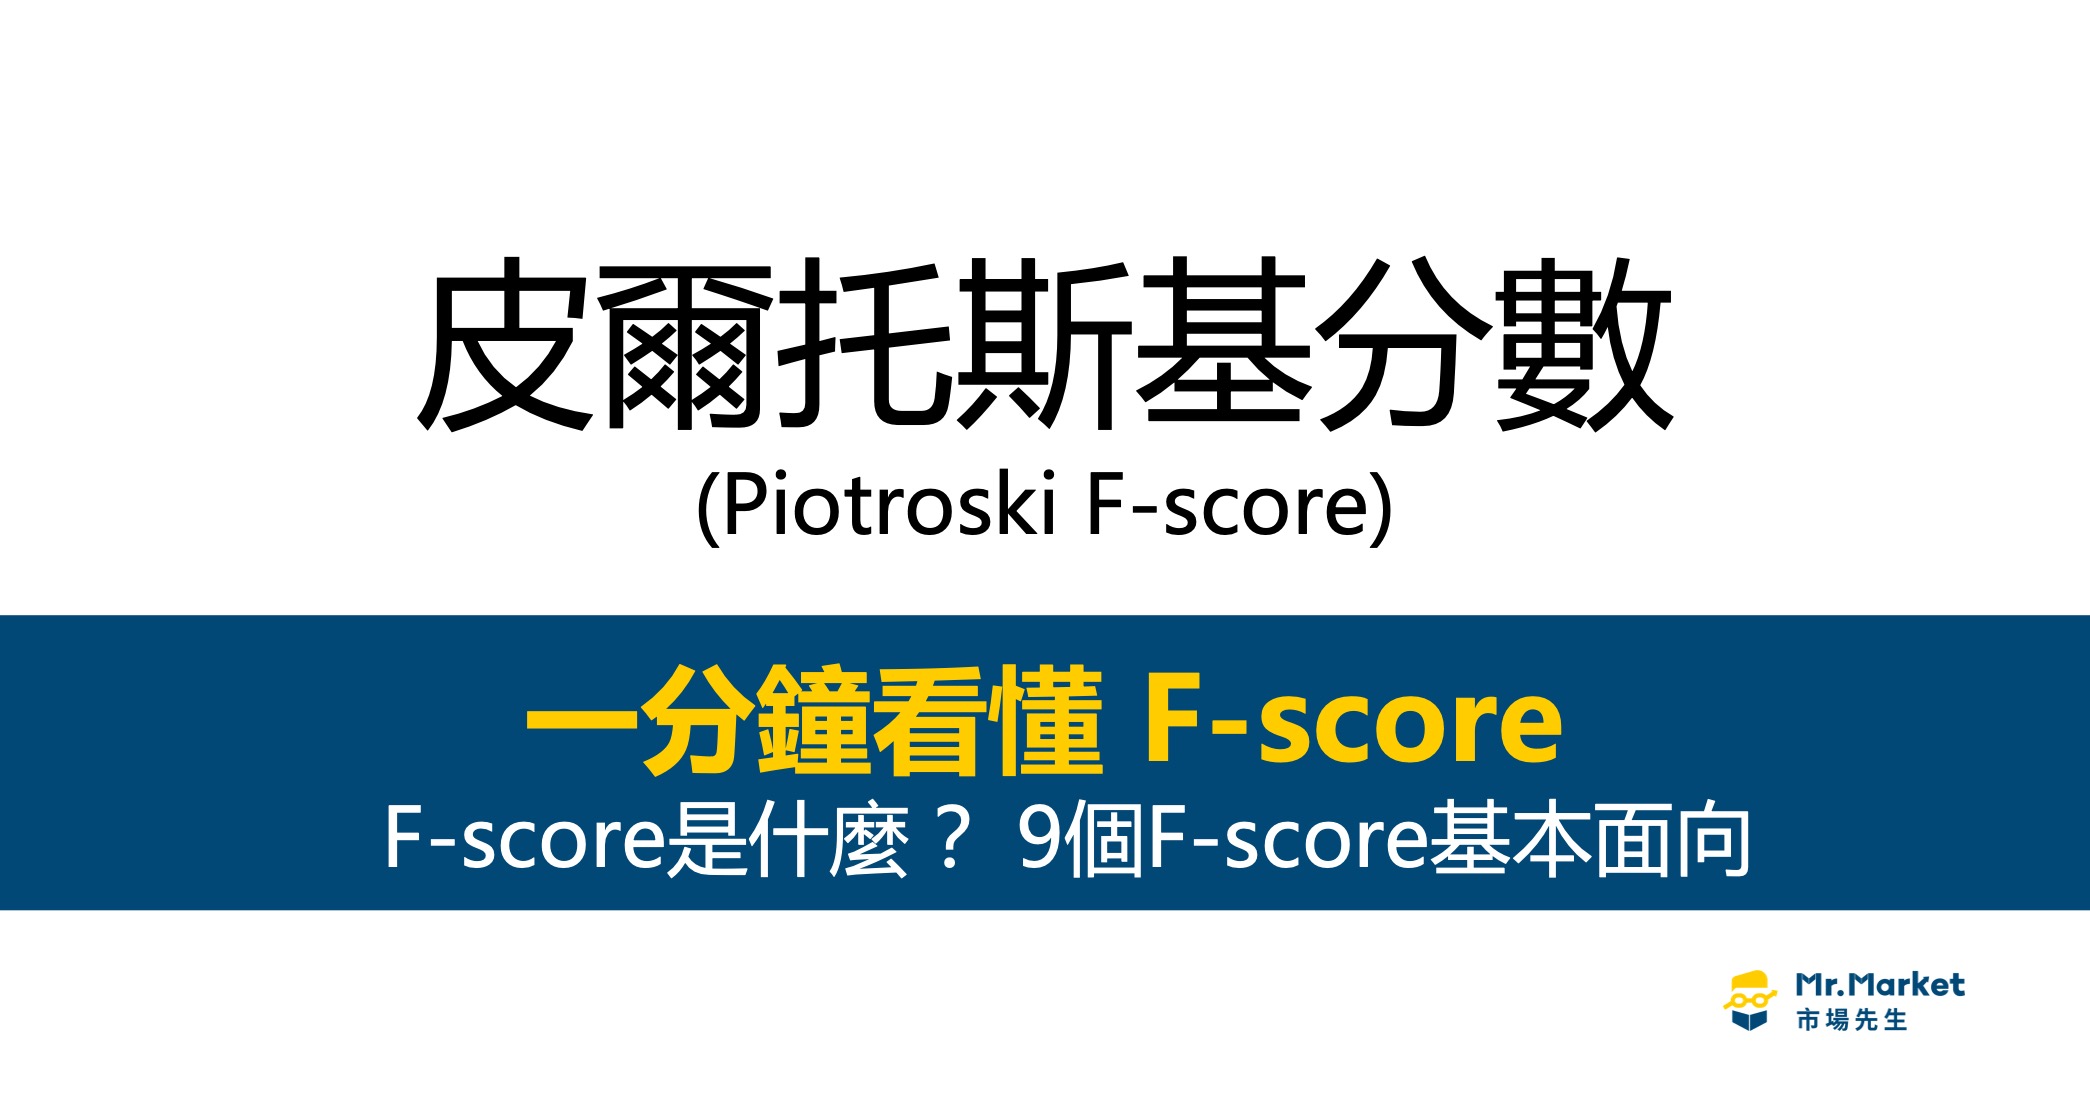 F-score是什麼？如何用來選股？一次看懂皮爾托斯基分數